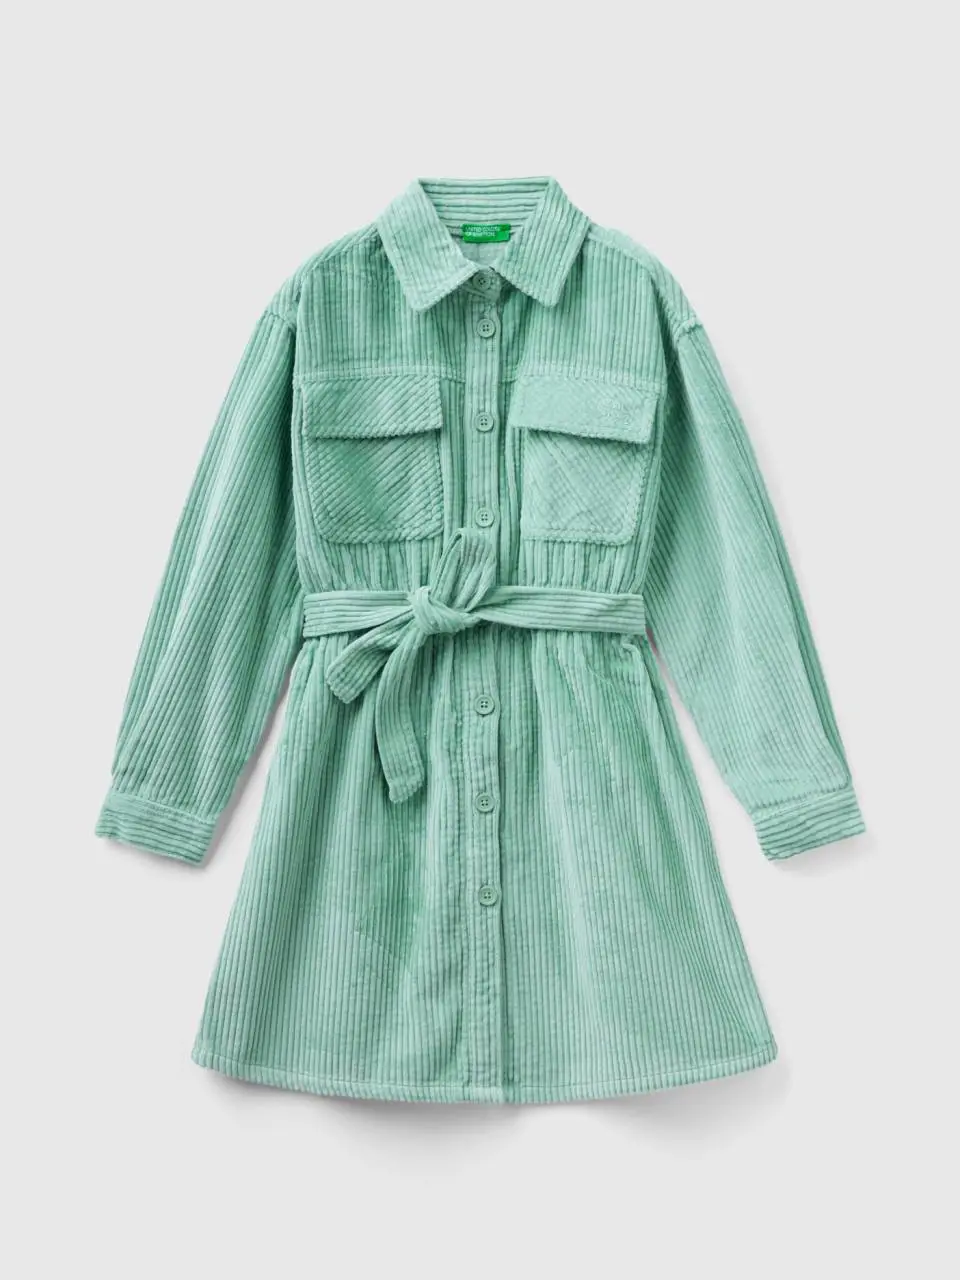 Benetton corduroy shirt dress. 1